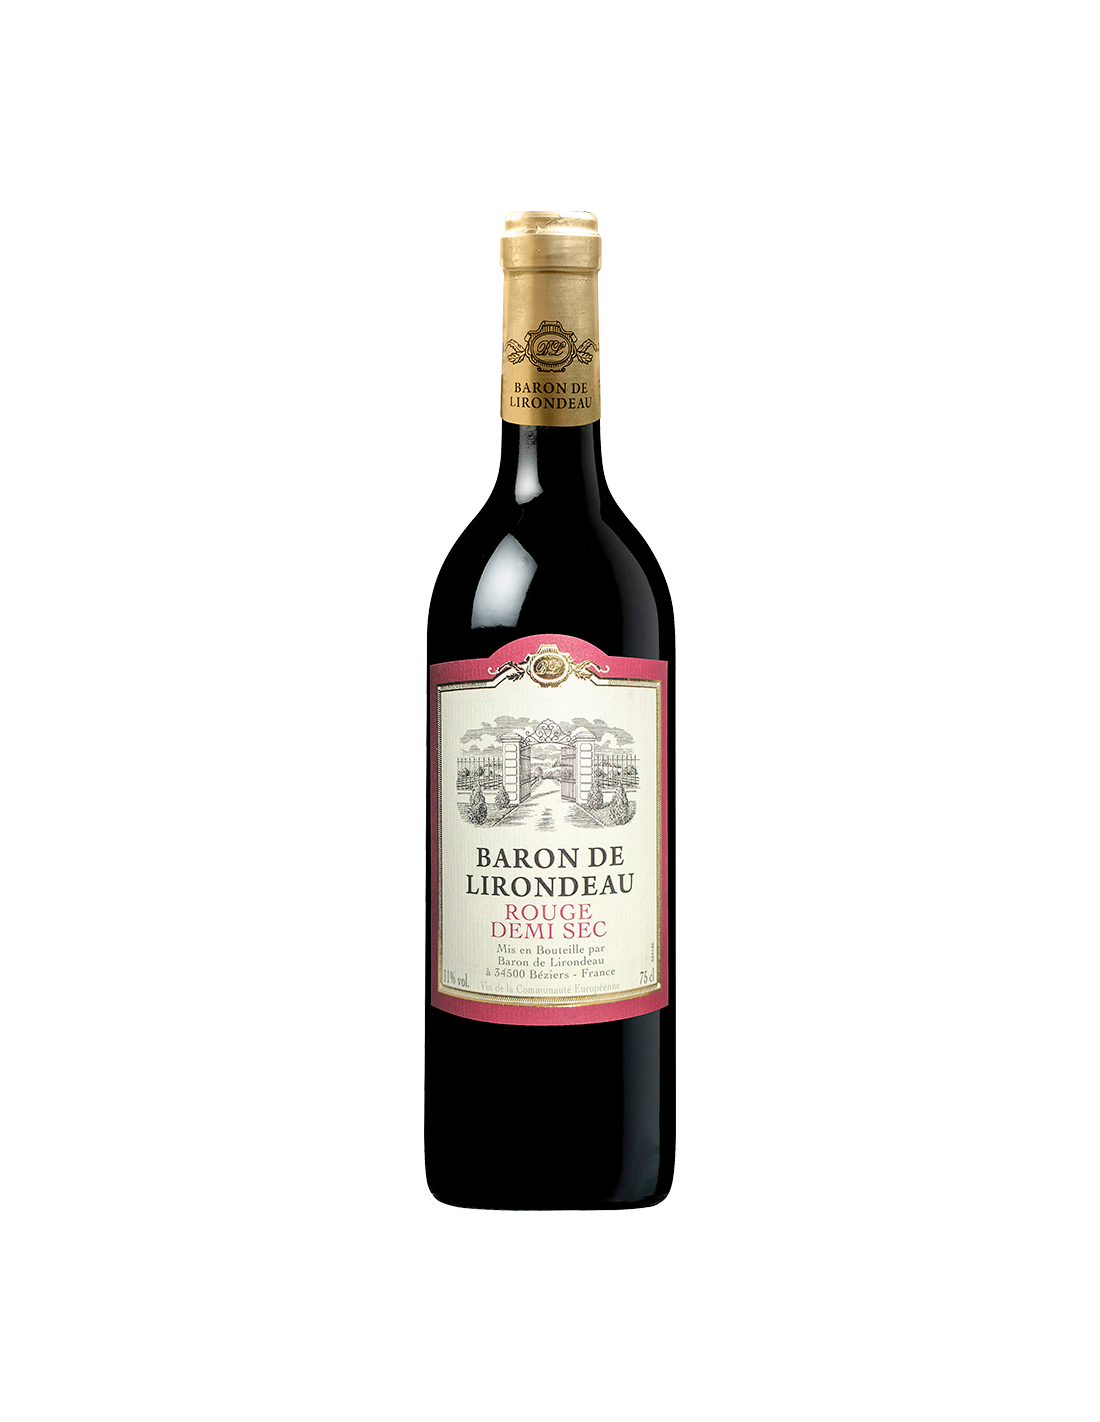 Vin rosu demisec Baron de Lirondeau Bordeaux, 10.5% alc., 0.75L, Franta alcooldiscount.ro